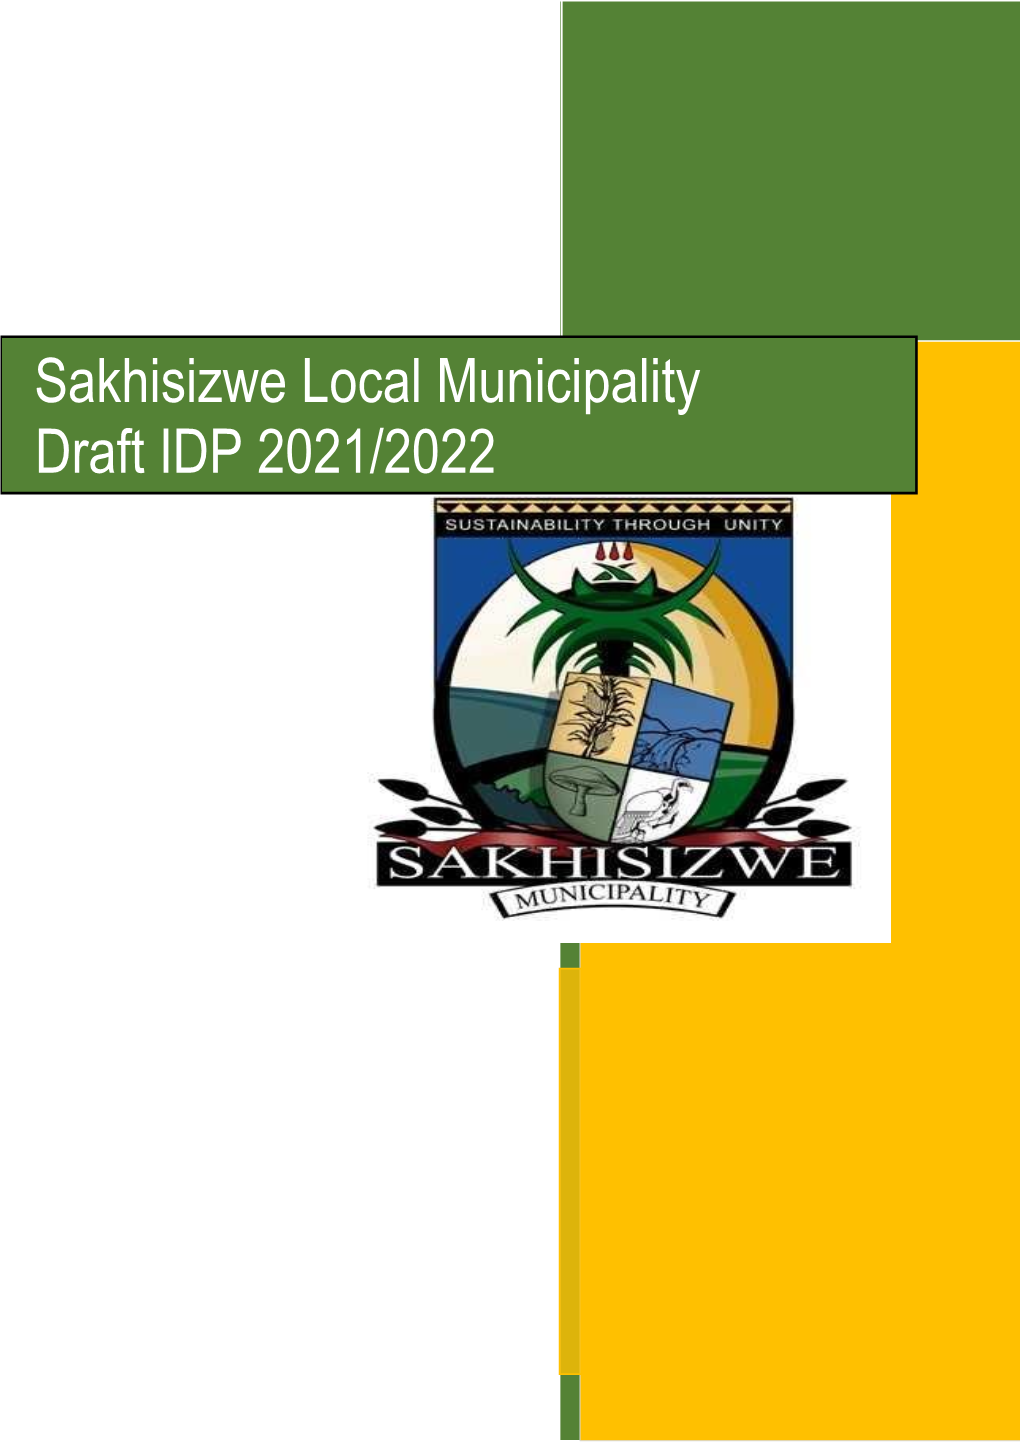 Sakhisizwe Local Municipality Draft IDP 2021/2022